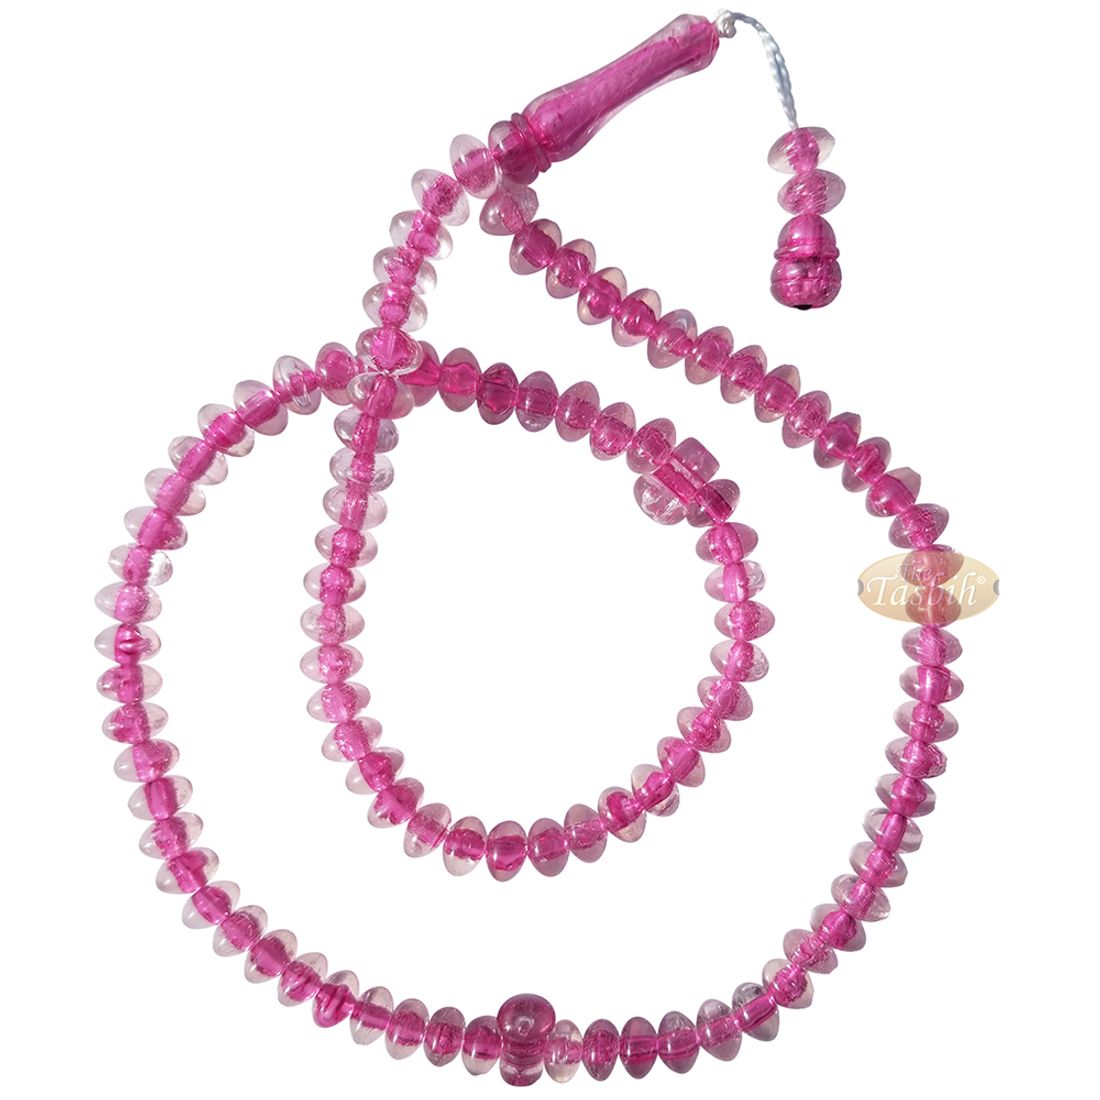 Muslim DHIKR Beads – Medium-size Translucent Pink 8x5mm Simple Plastic 99-bd Islamic Prayer Tasbeeh Dhikr Salat 20-inch Misbaha Knob Ends